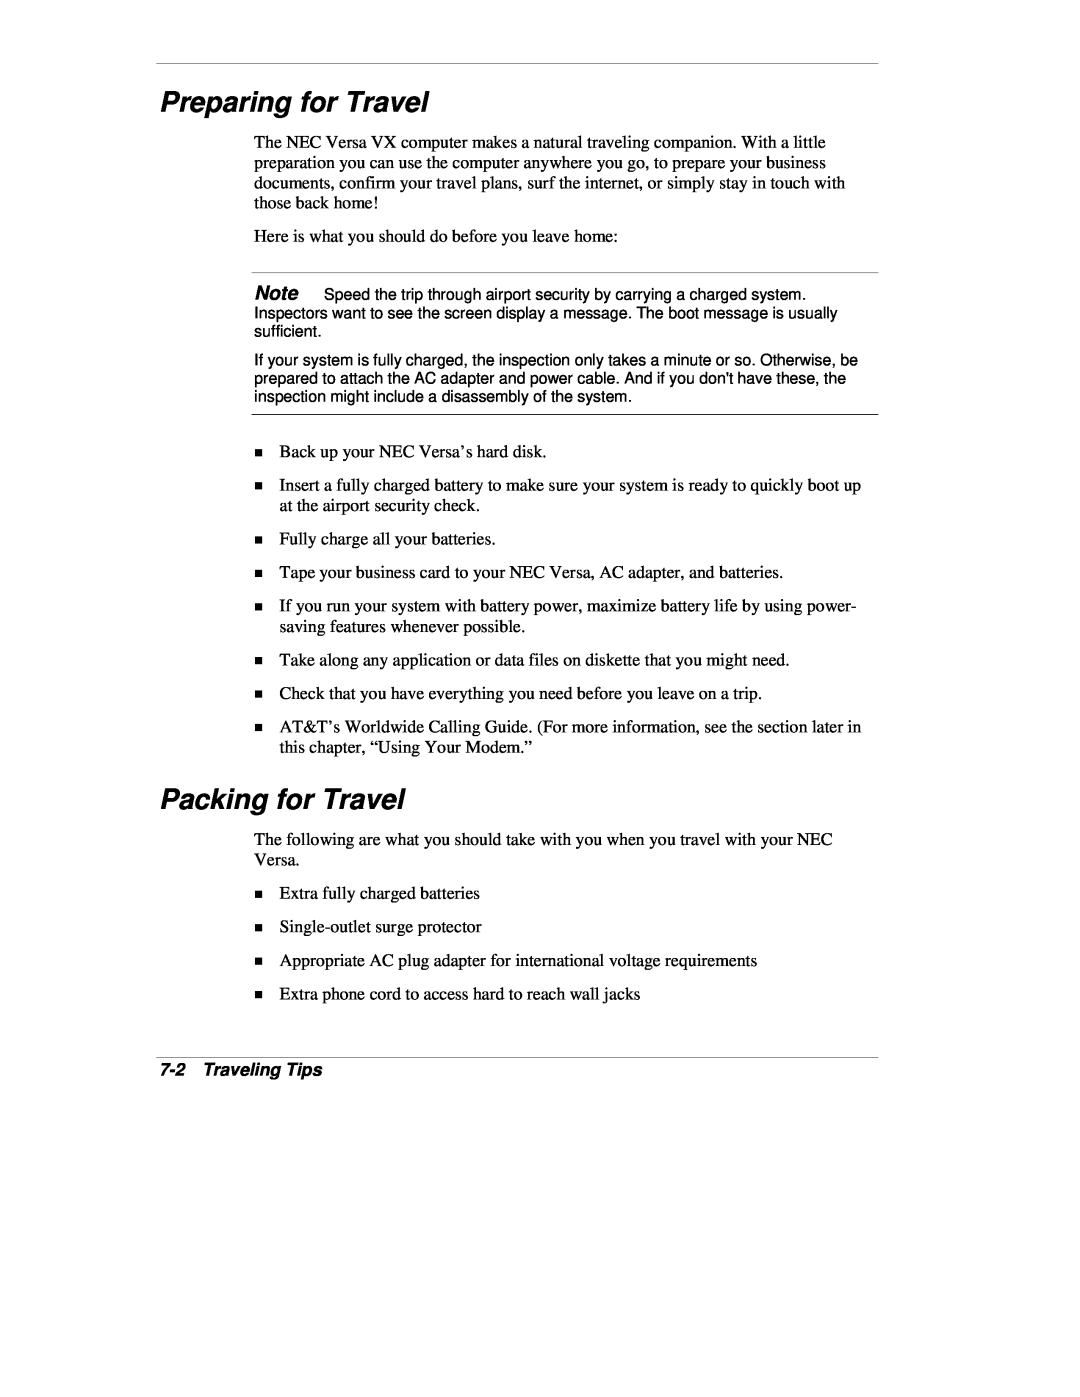 NEC VX manual Preparing for Travel, Packing for Travel, Traveling Tips 